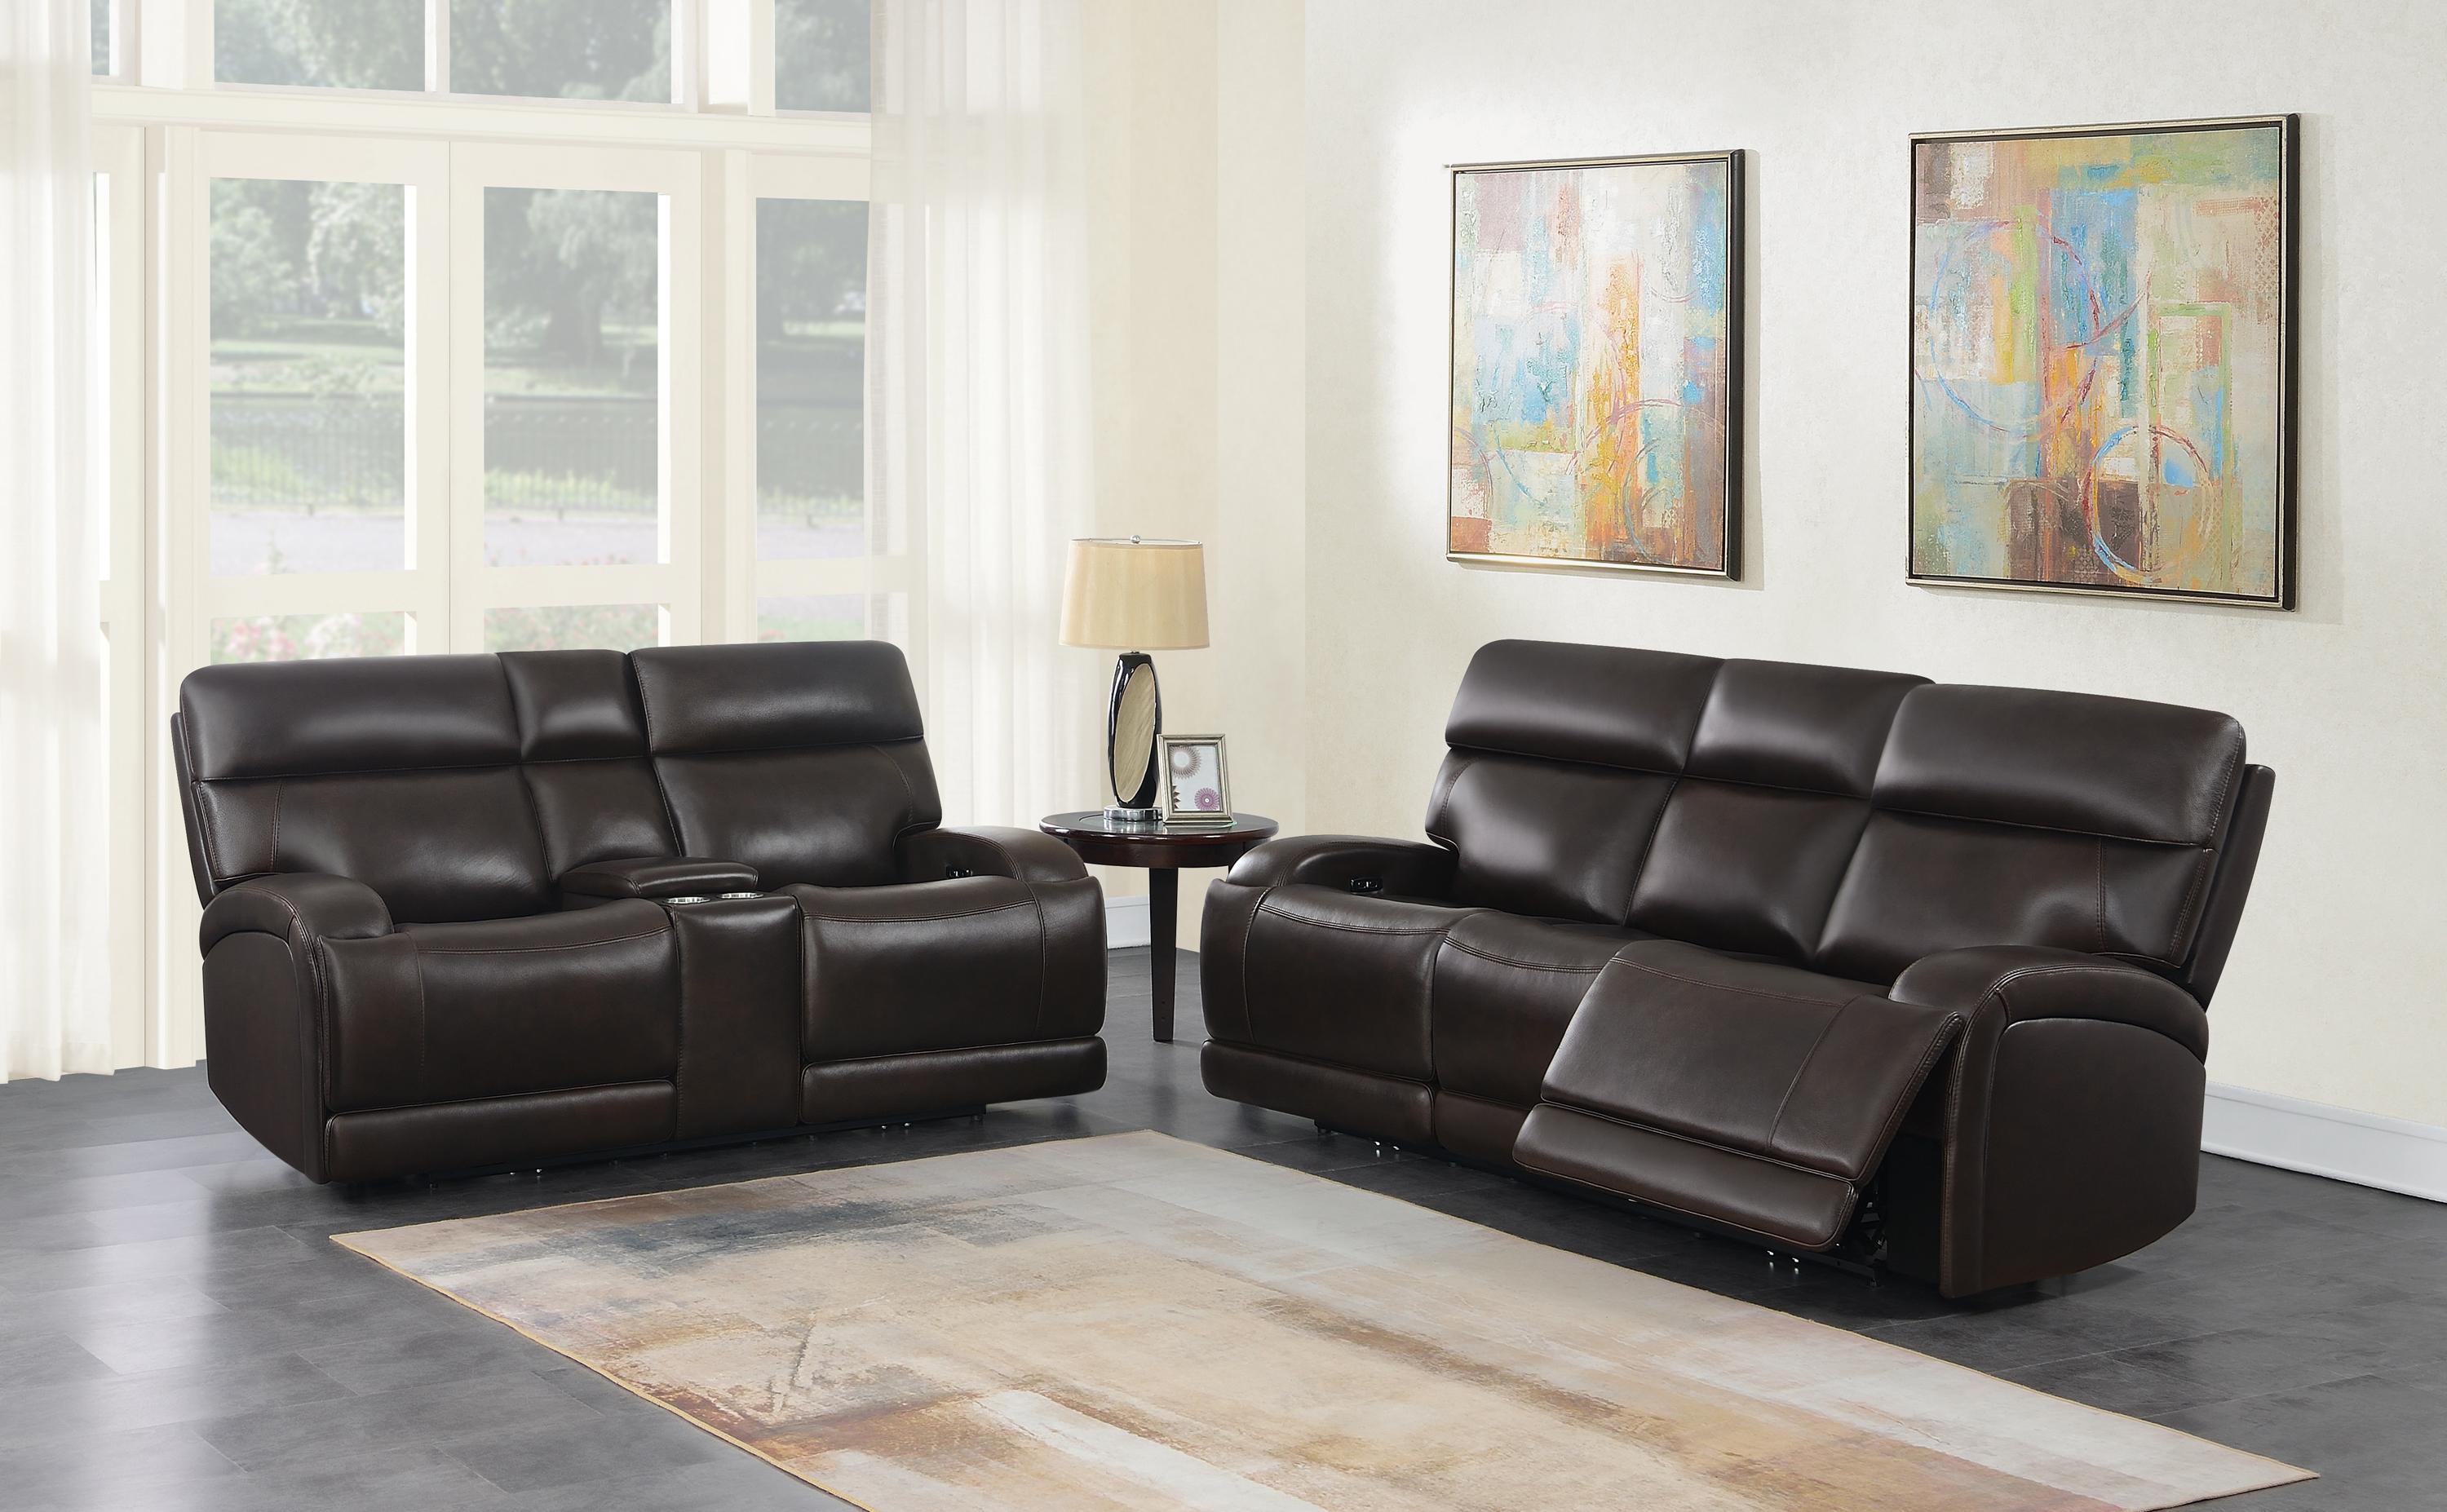 Modern Power Living Room Set 610481P-S2 Longport 610481P-S2 in Dark Brown Top grain leather